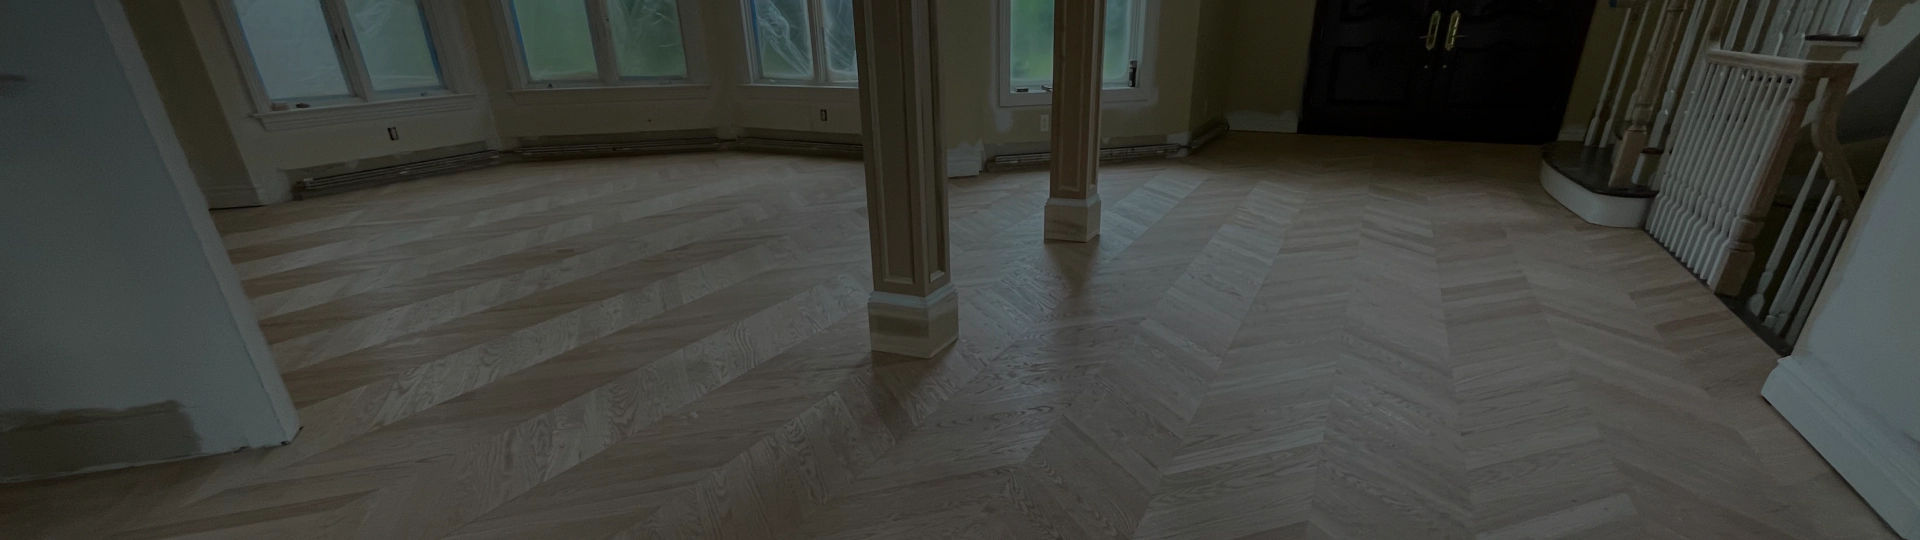 flooring breadcrumb